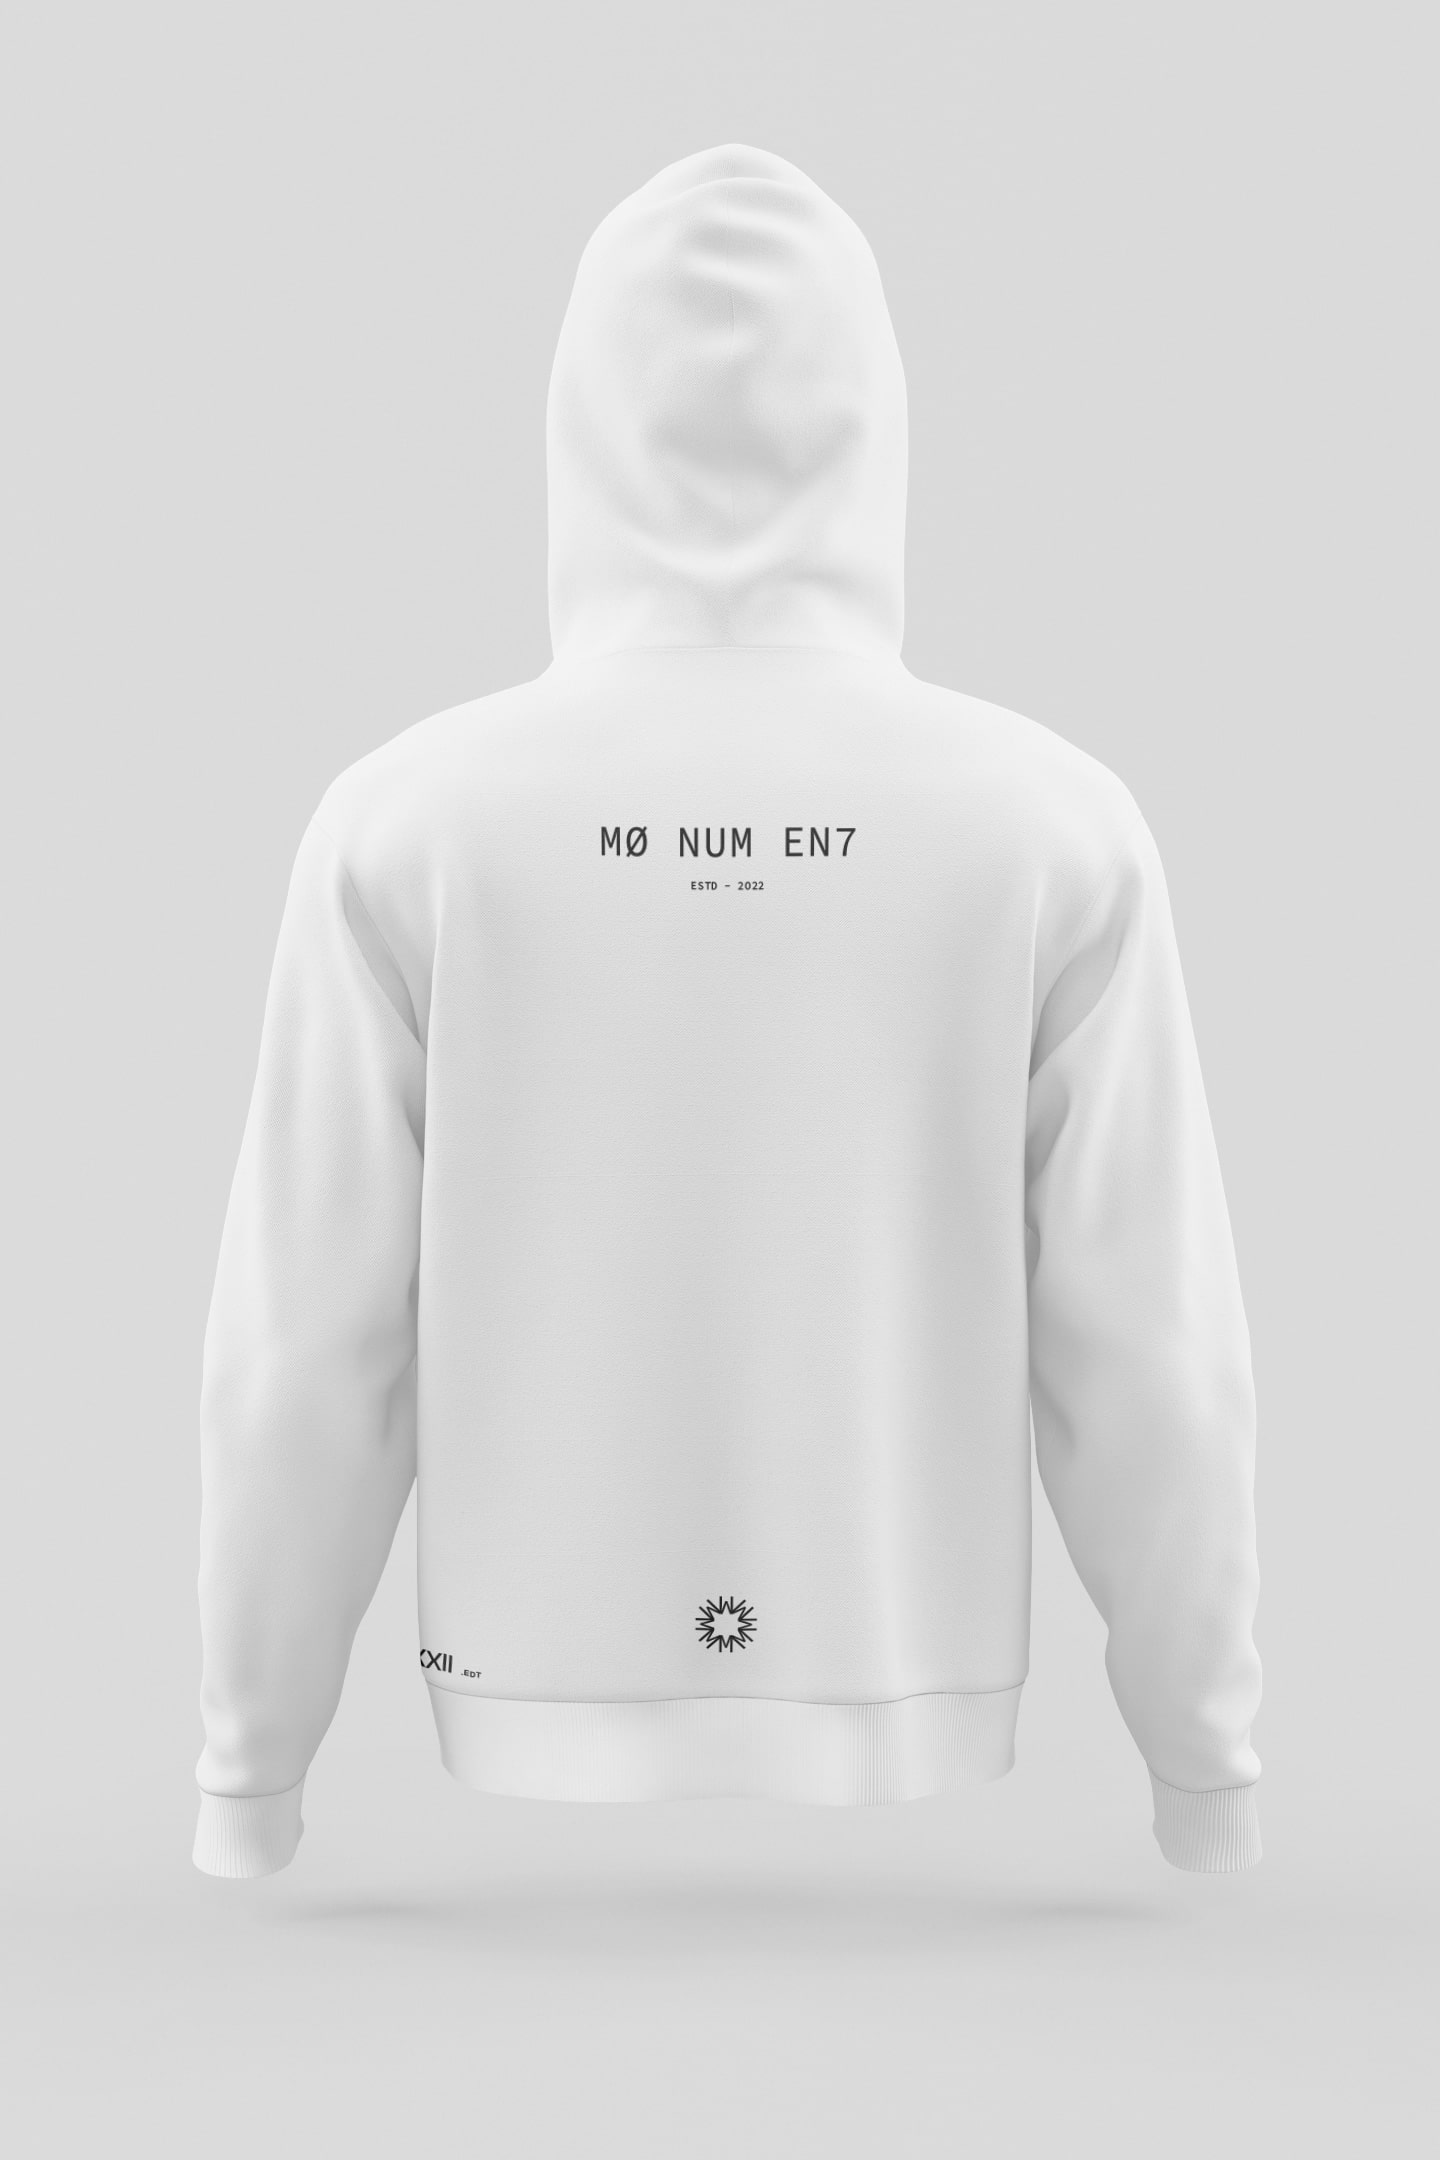 MØNUMEN7®, hoodie white - back